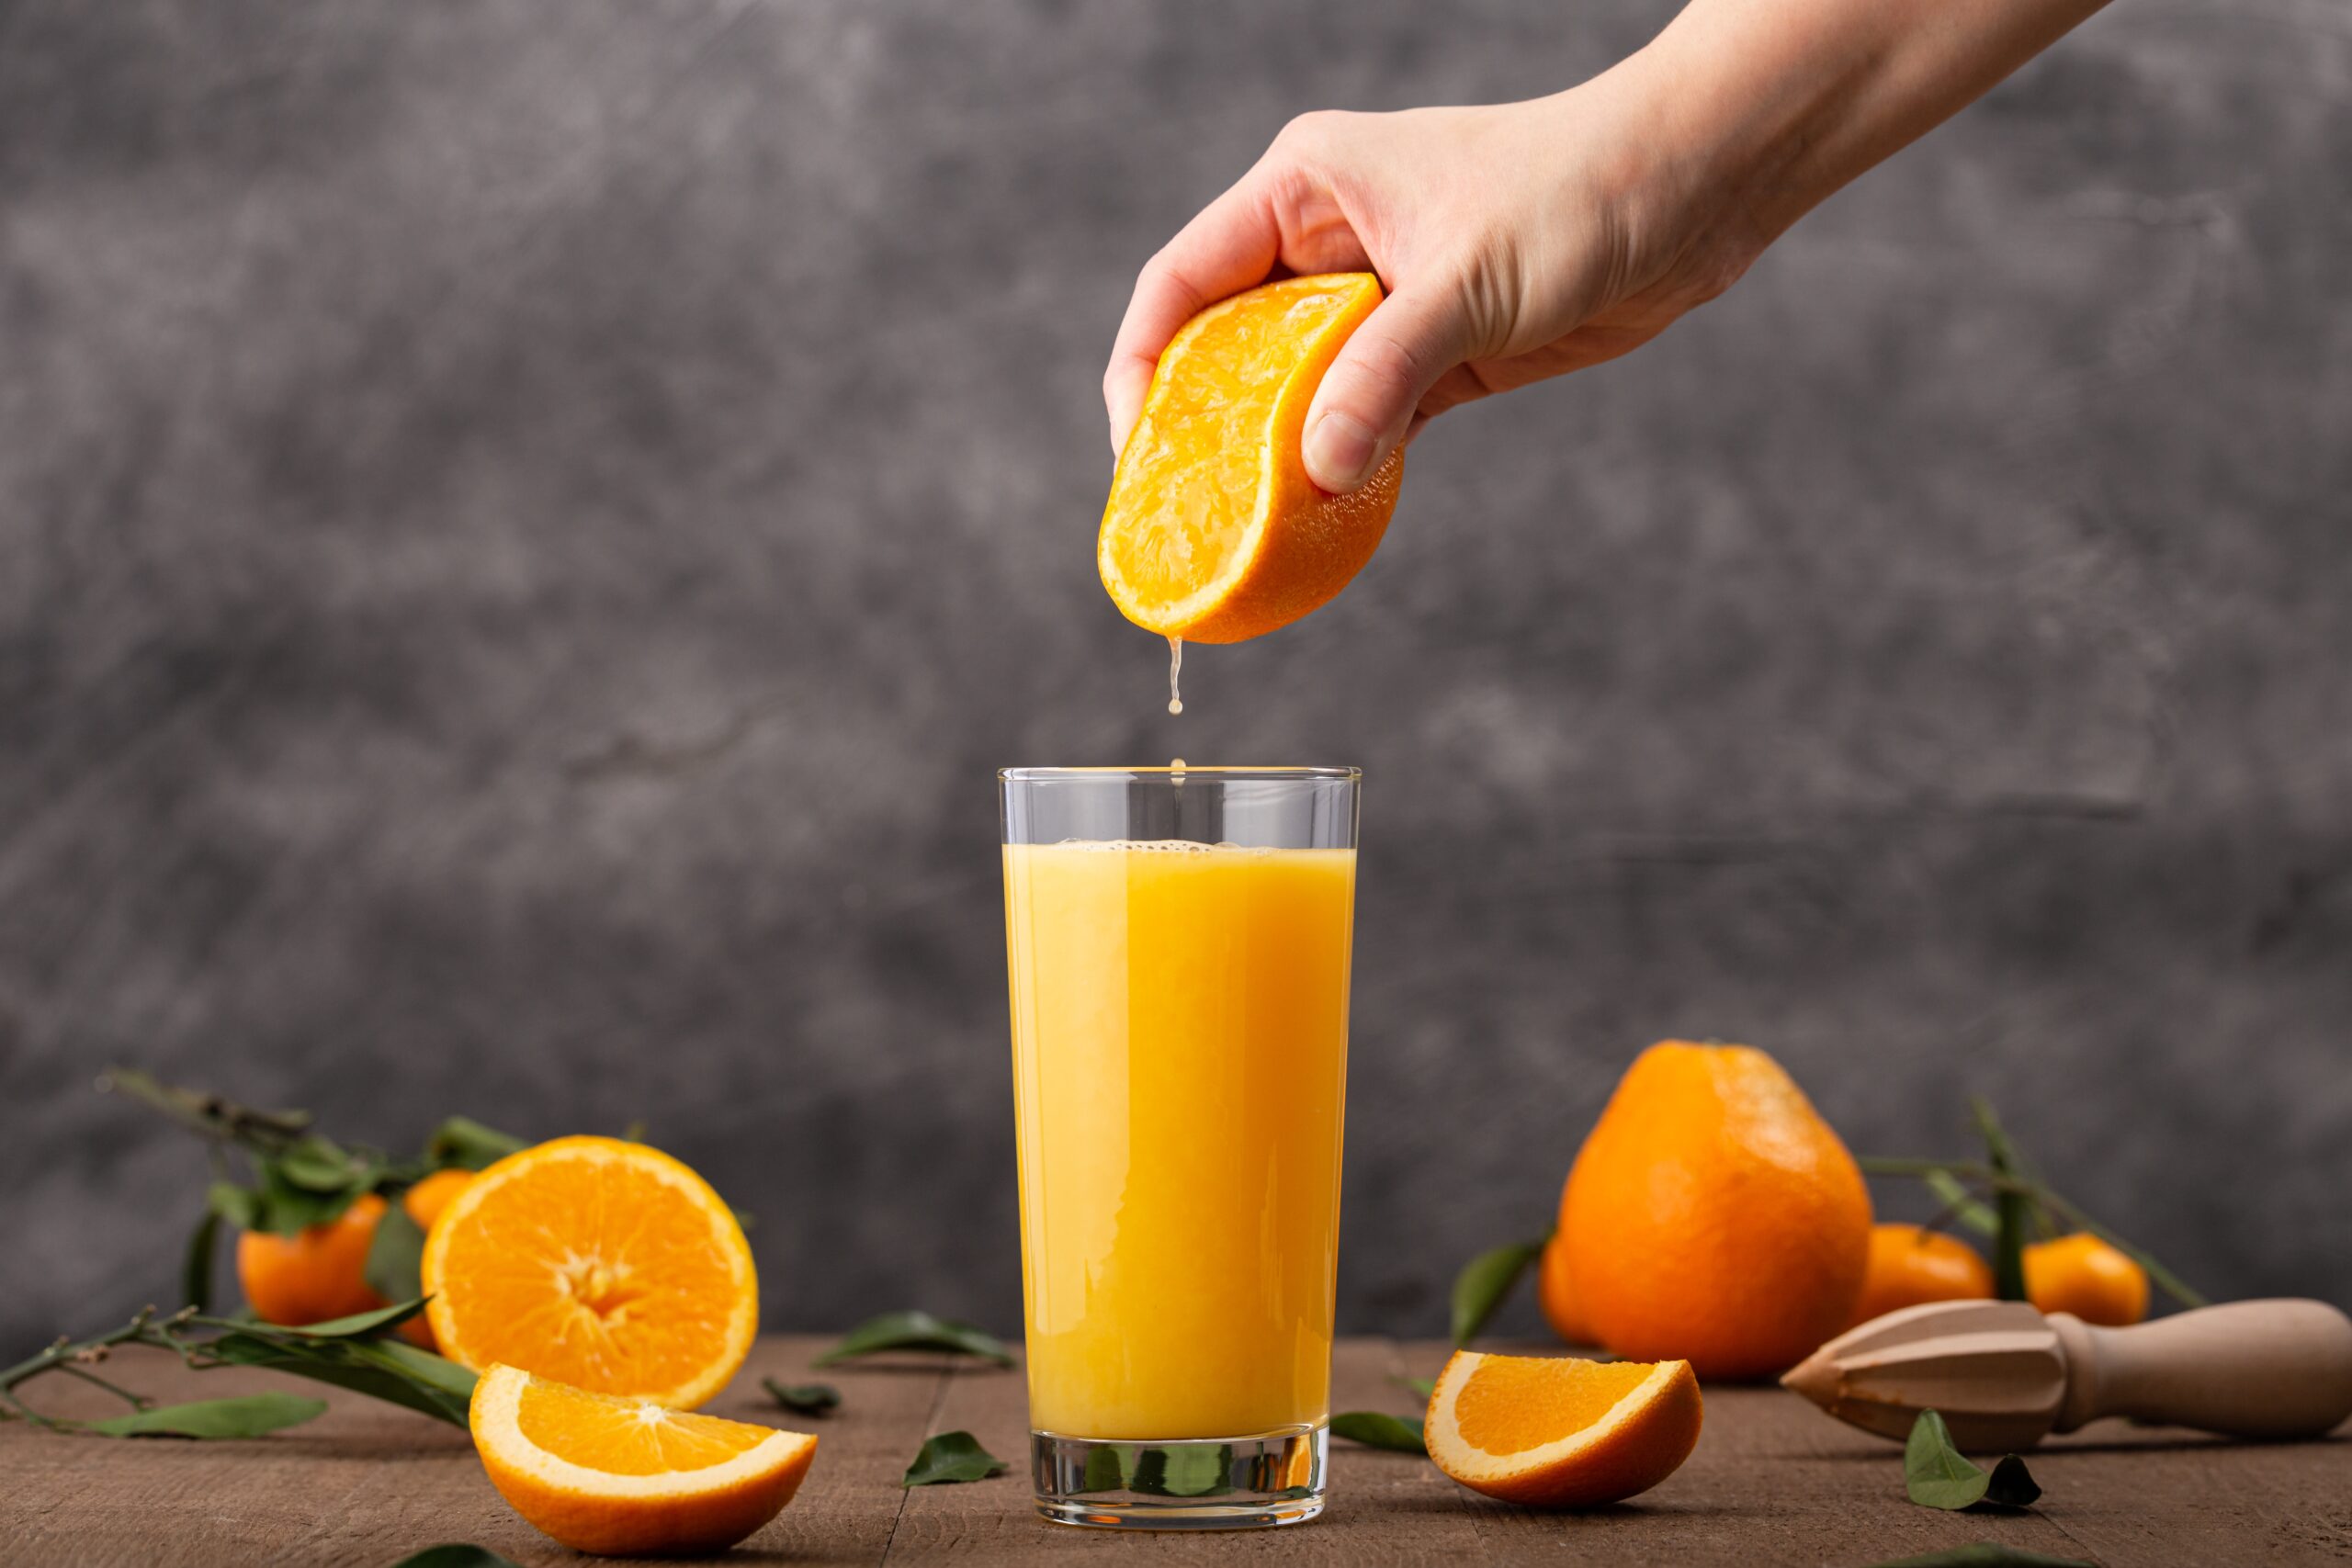 Is orange juice gluten free